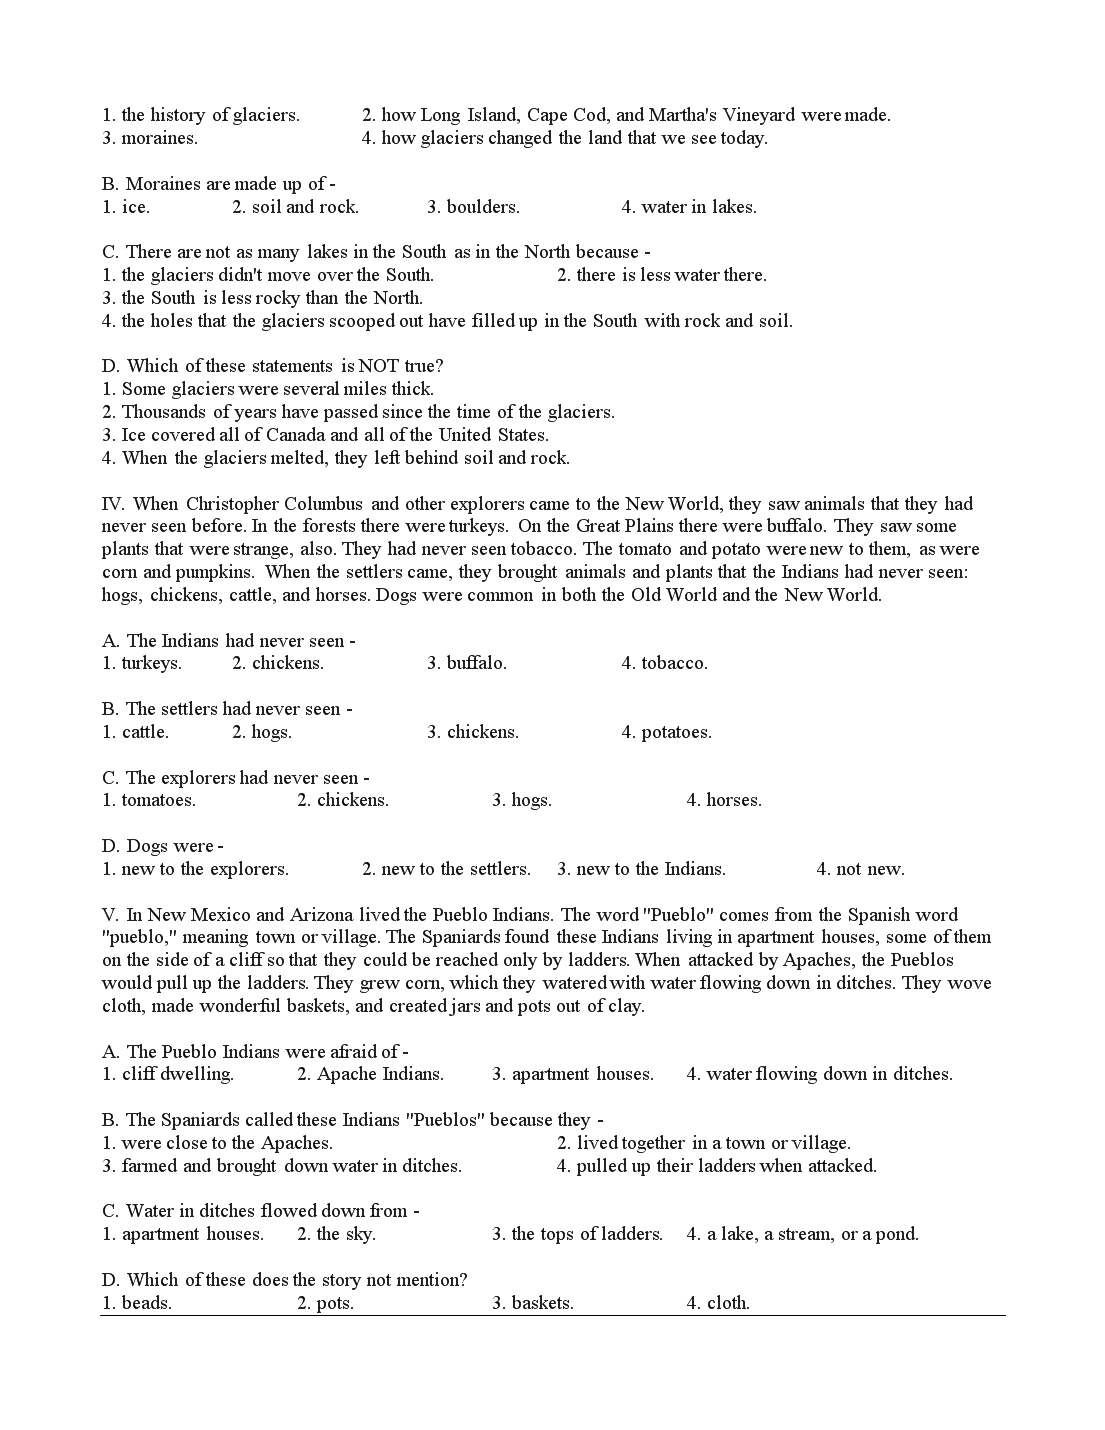 Reading comprehension test 1 trang 4